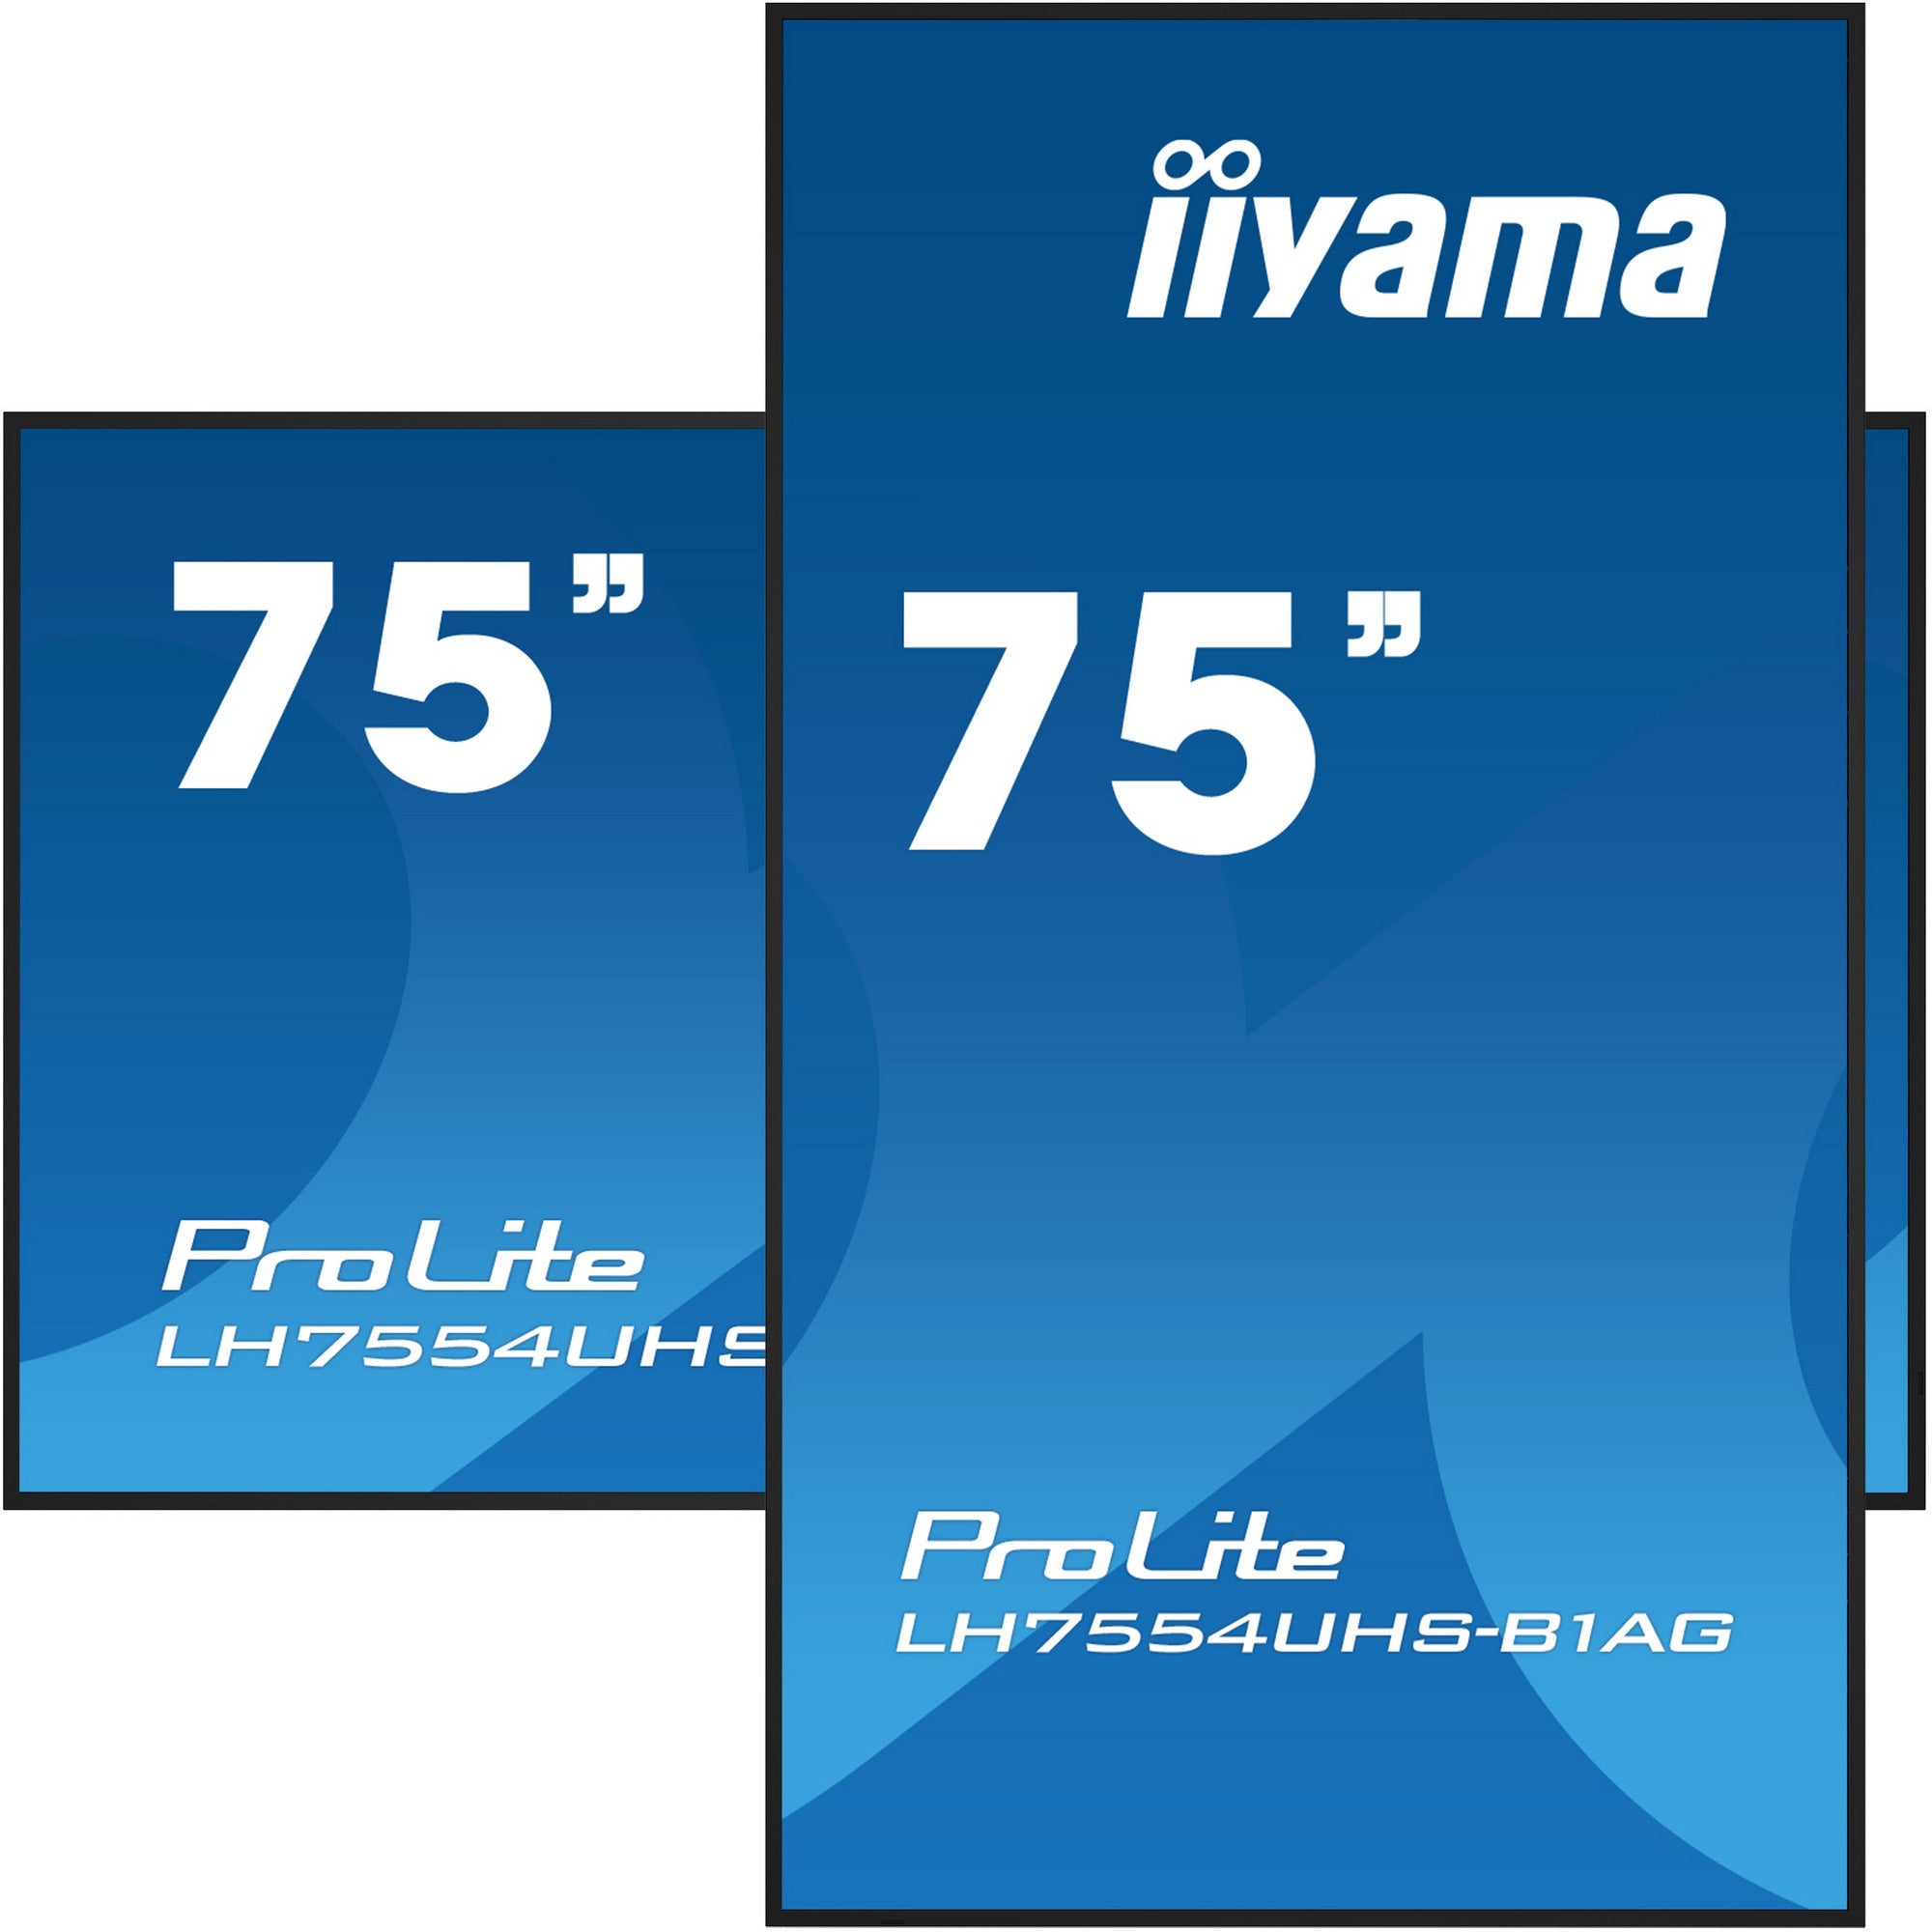 Iiyama ProLite LH7554UHS-B1AG 75" 4K UHD Digital Signage 24/7 display with Android OS, FailOver & Intel® SDM slot